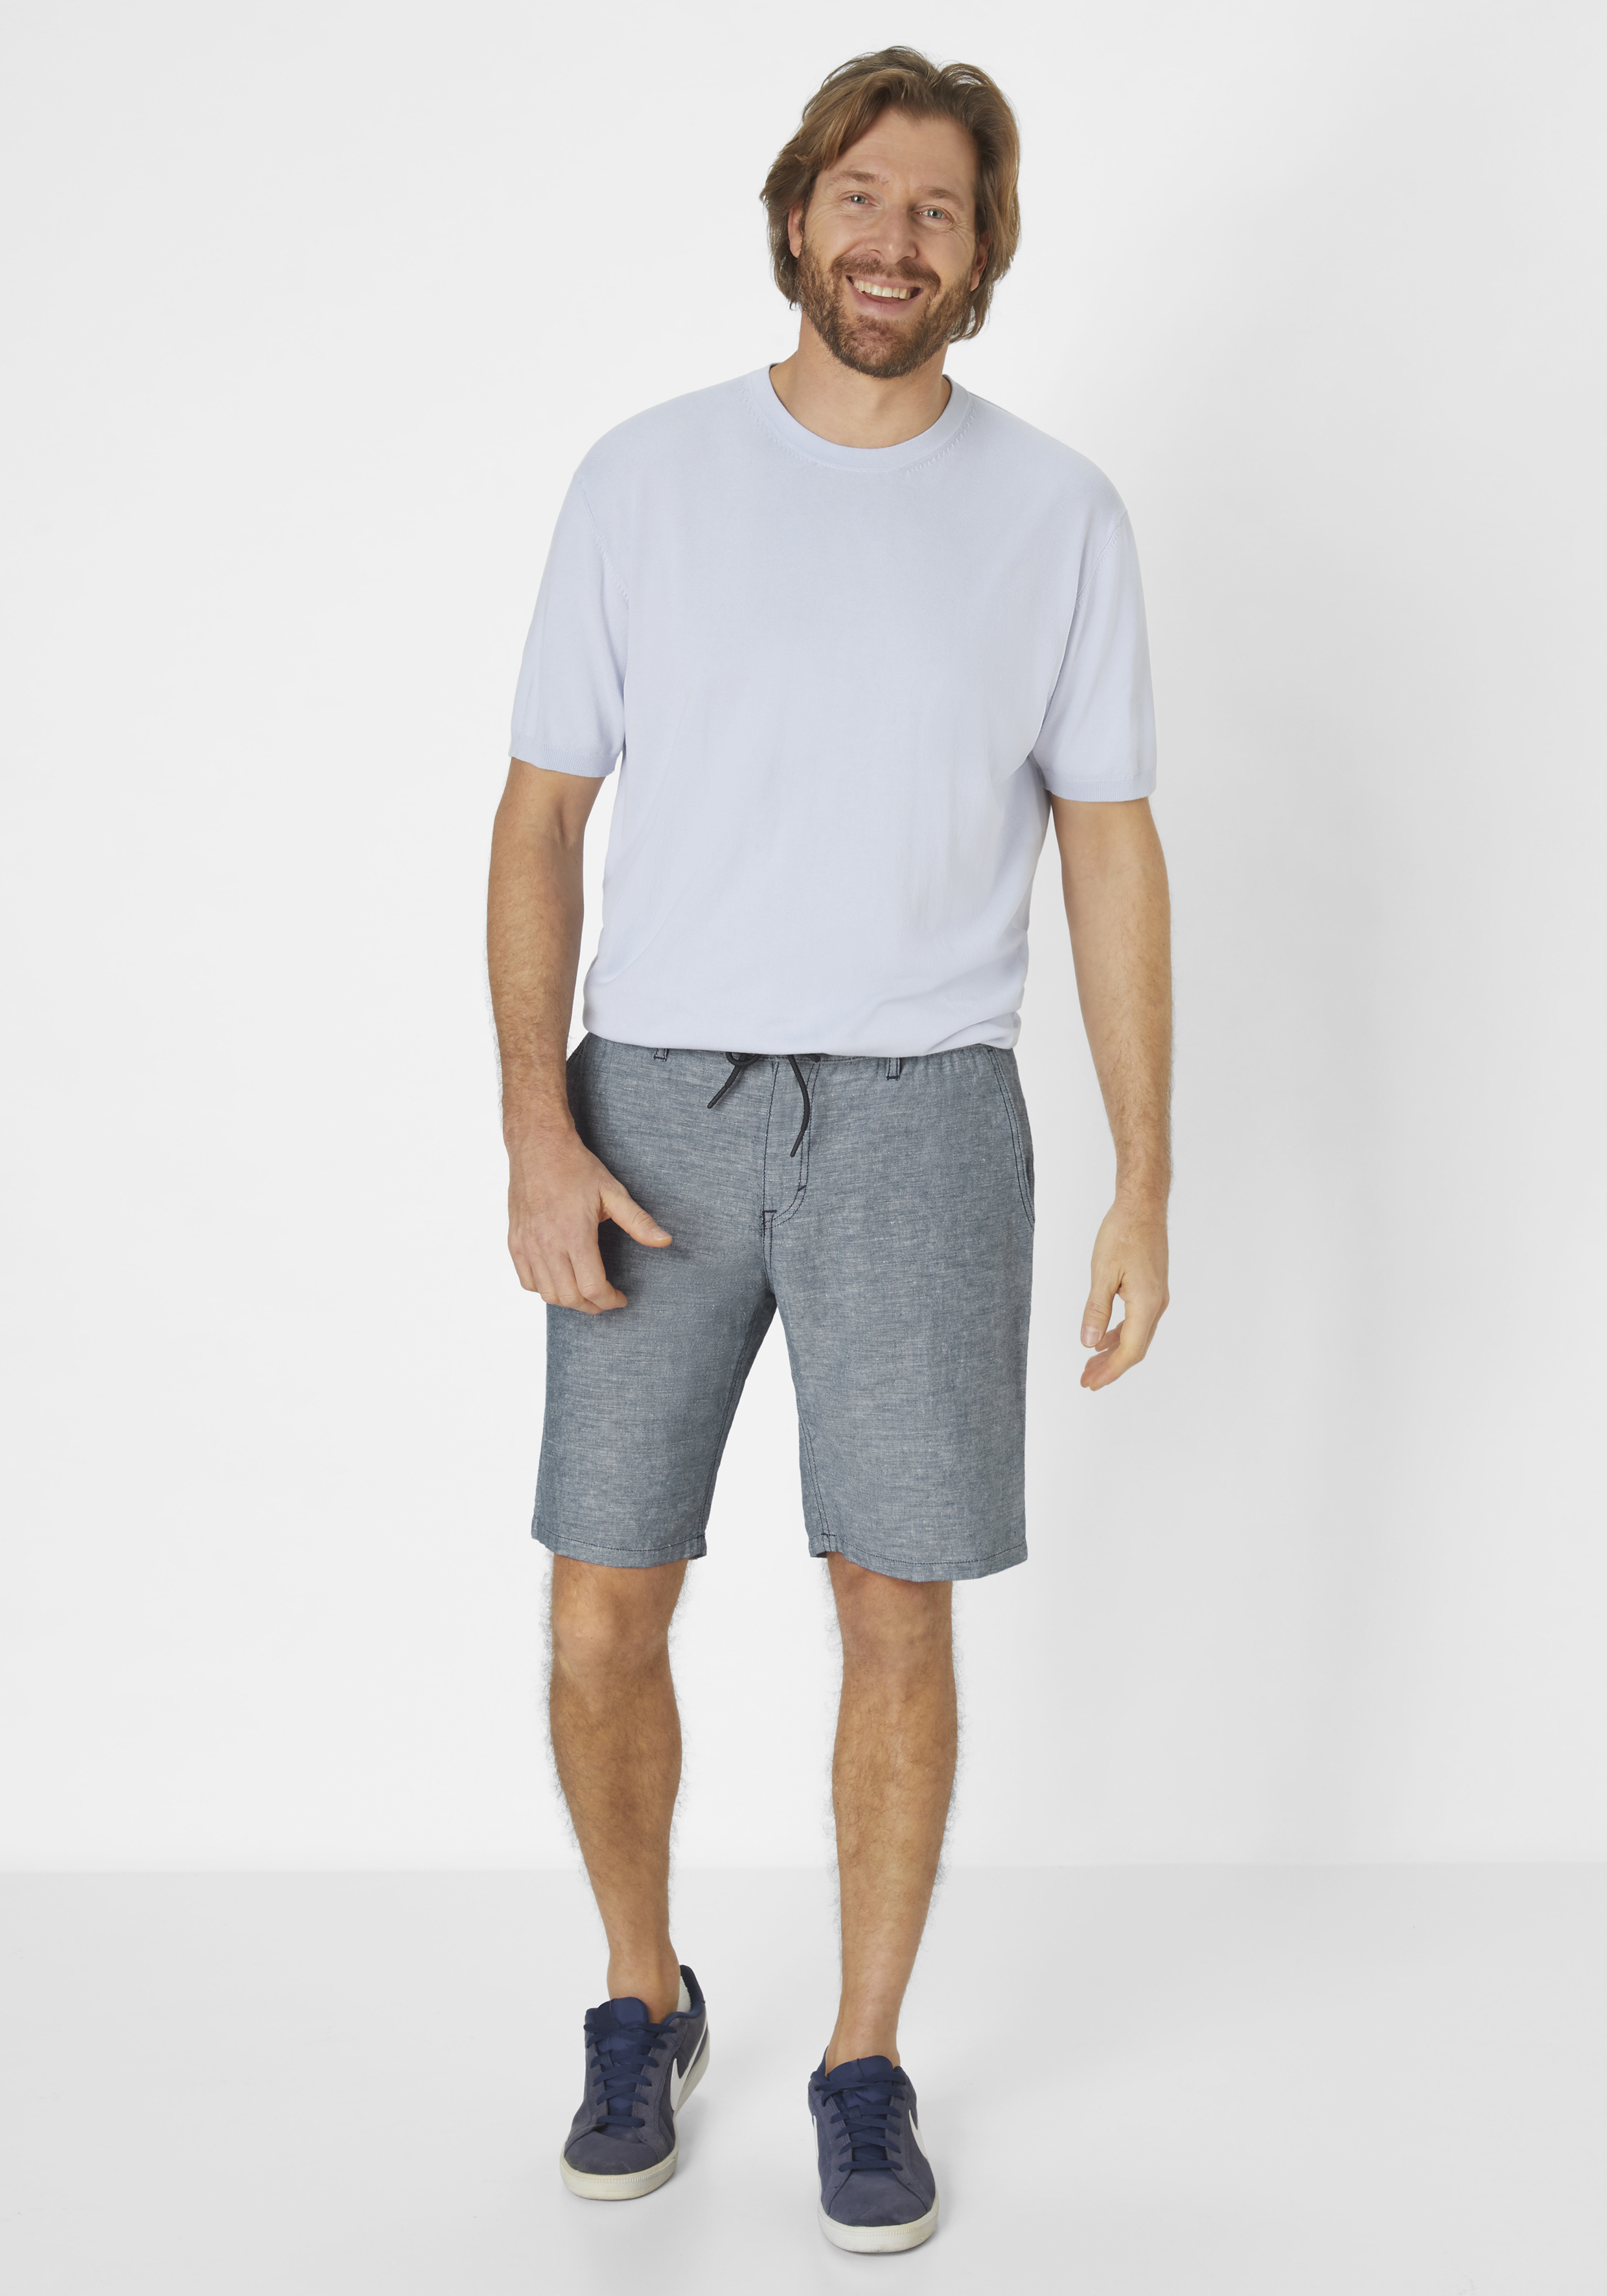 801627101000-0800_8_herren-bermudas-relaxed-fit-cotton-leinen-shorts-york-paddocks.jpg